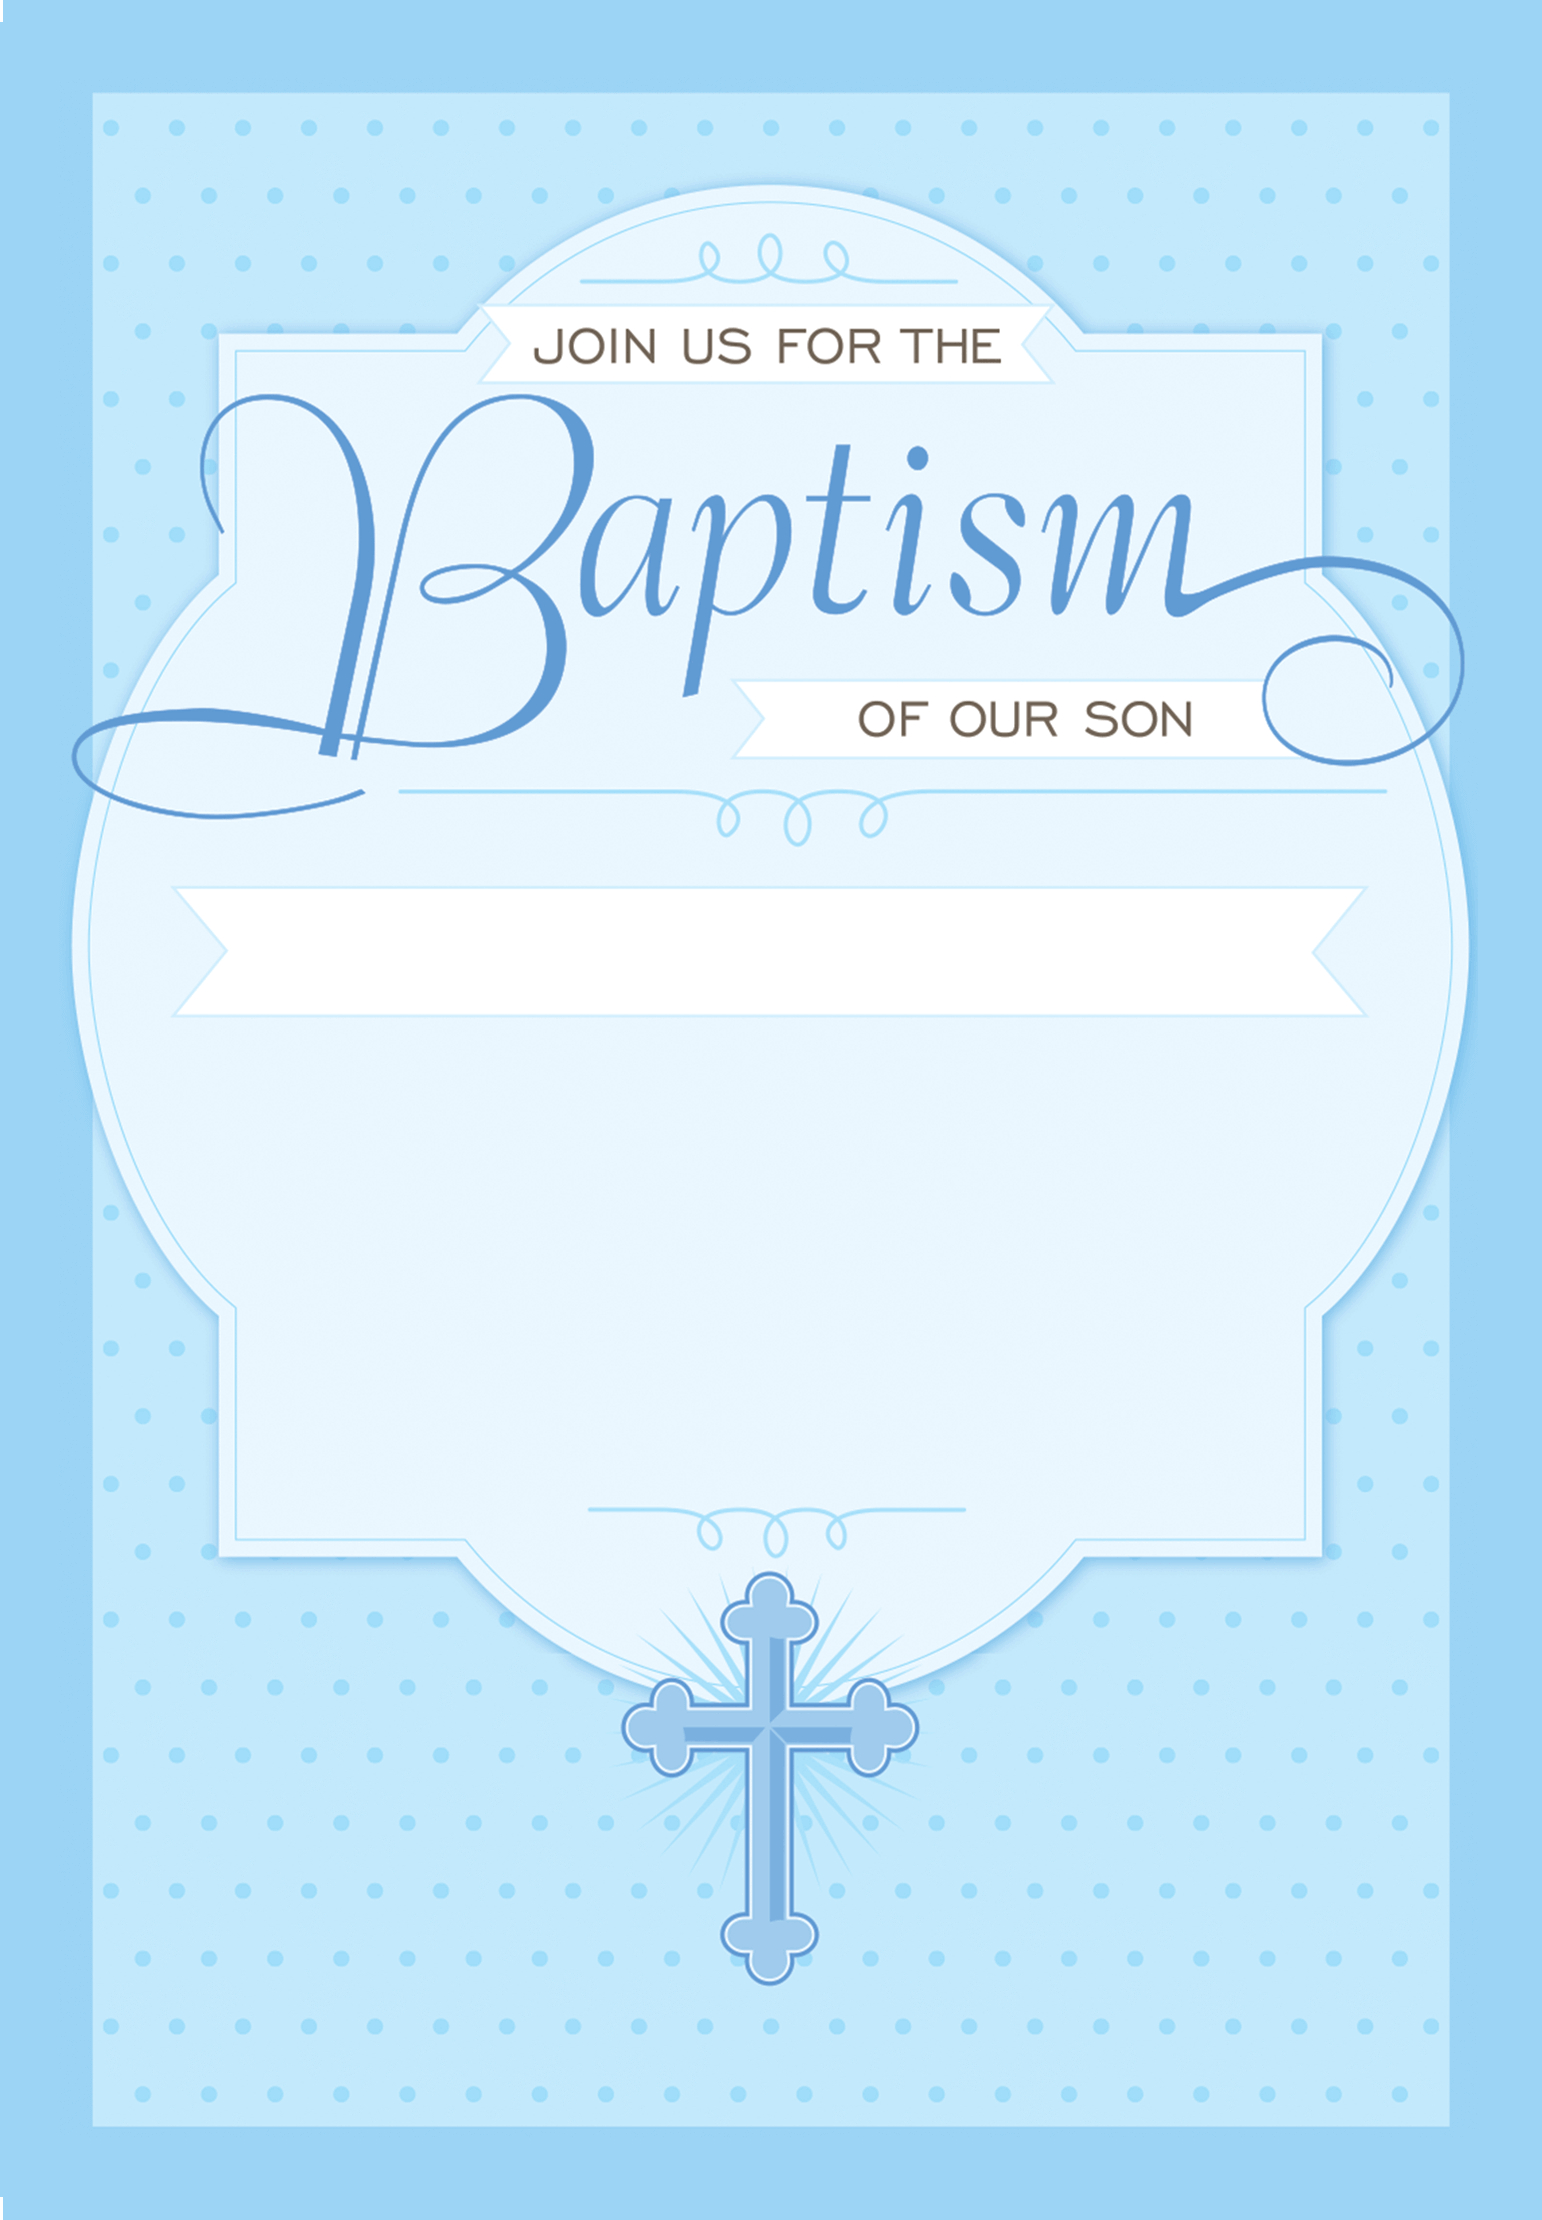 Free Baptism Invitation Templates